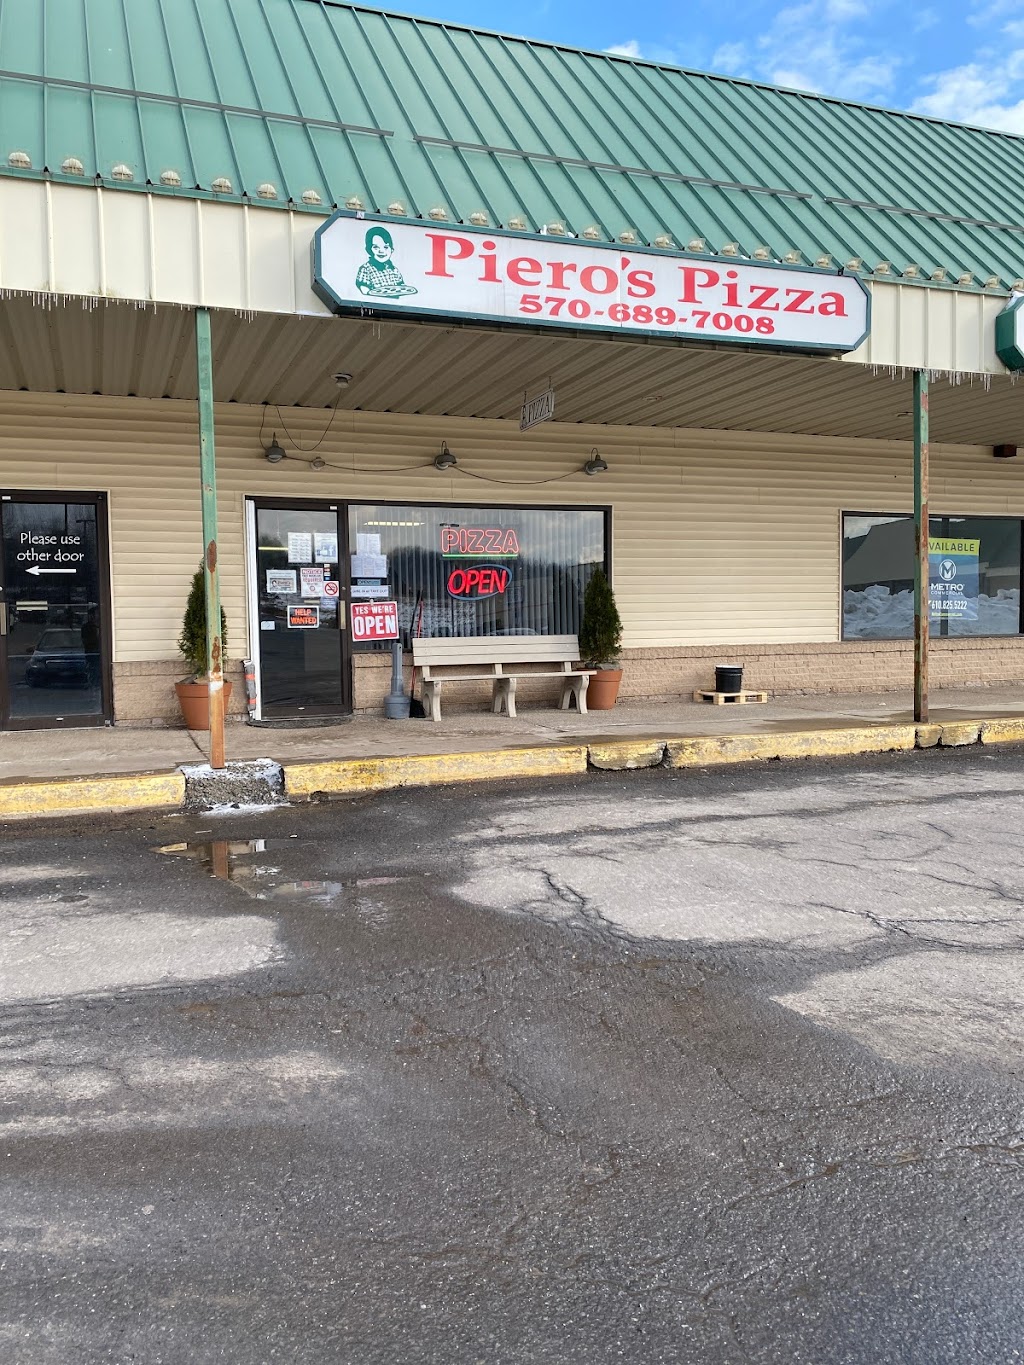 Pieros Pizza | 590 Hamlin Hwy, Lake Ariel, PA 18436 | Phone: (570) 689-7008